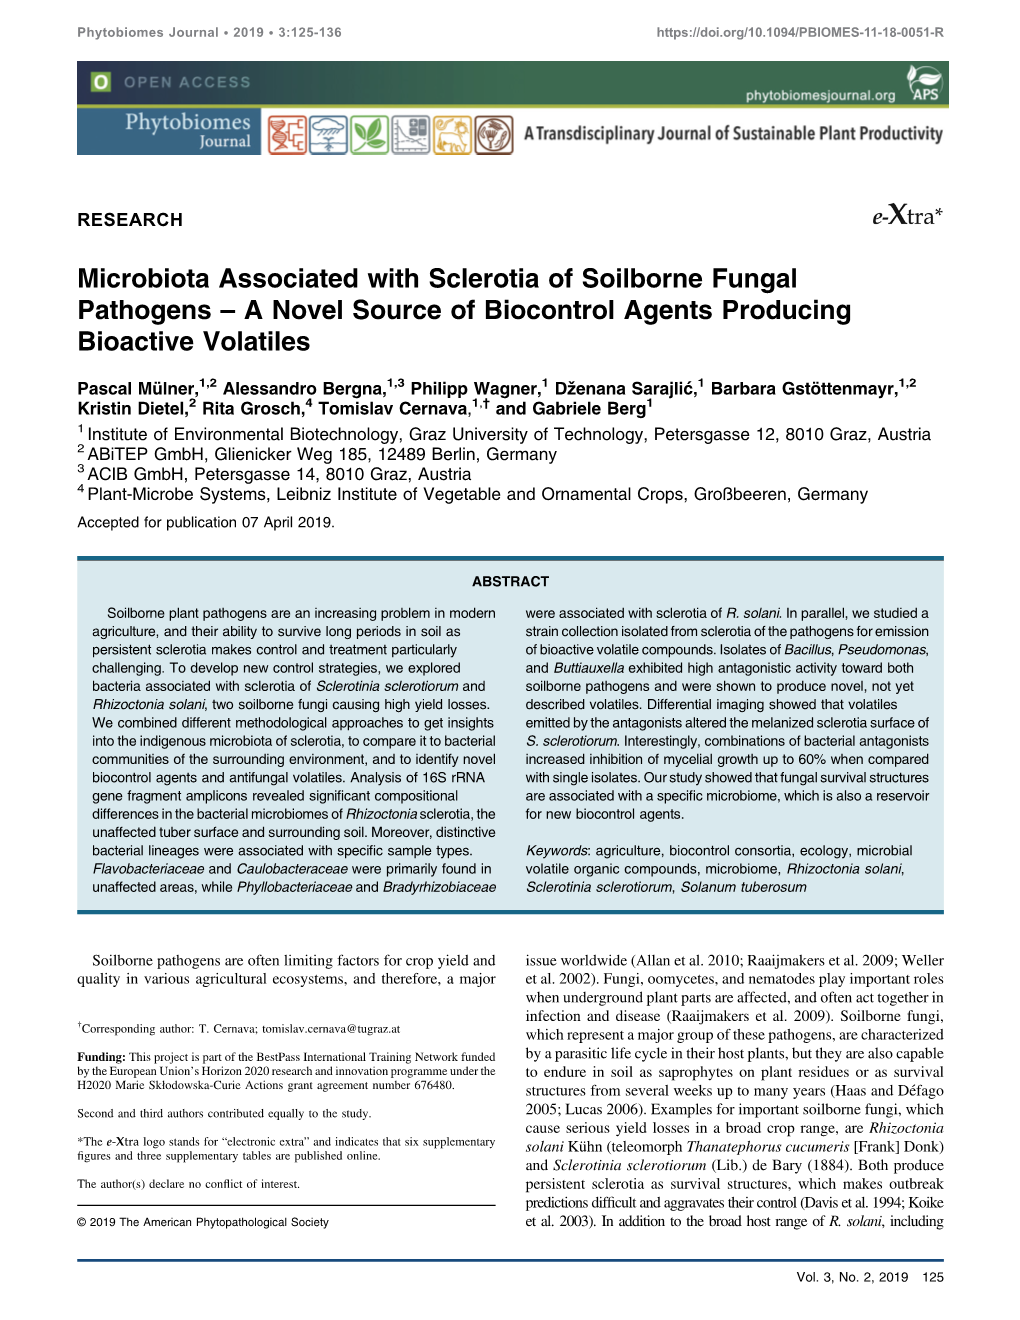 Microbiota Associated with Sclerotia of Soilborne Fungal Pathogens – a Novel Source of Biocontrol Agents Producing Bioactive Volatiles